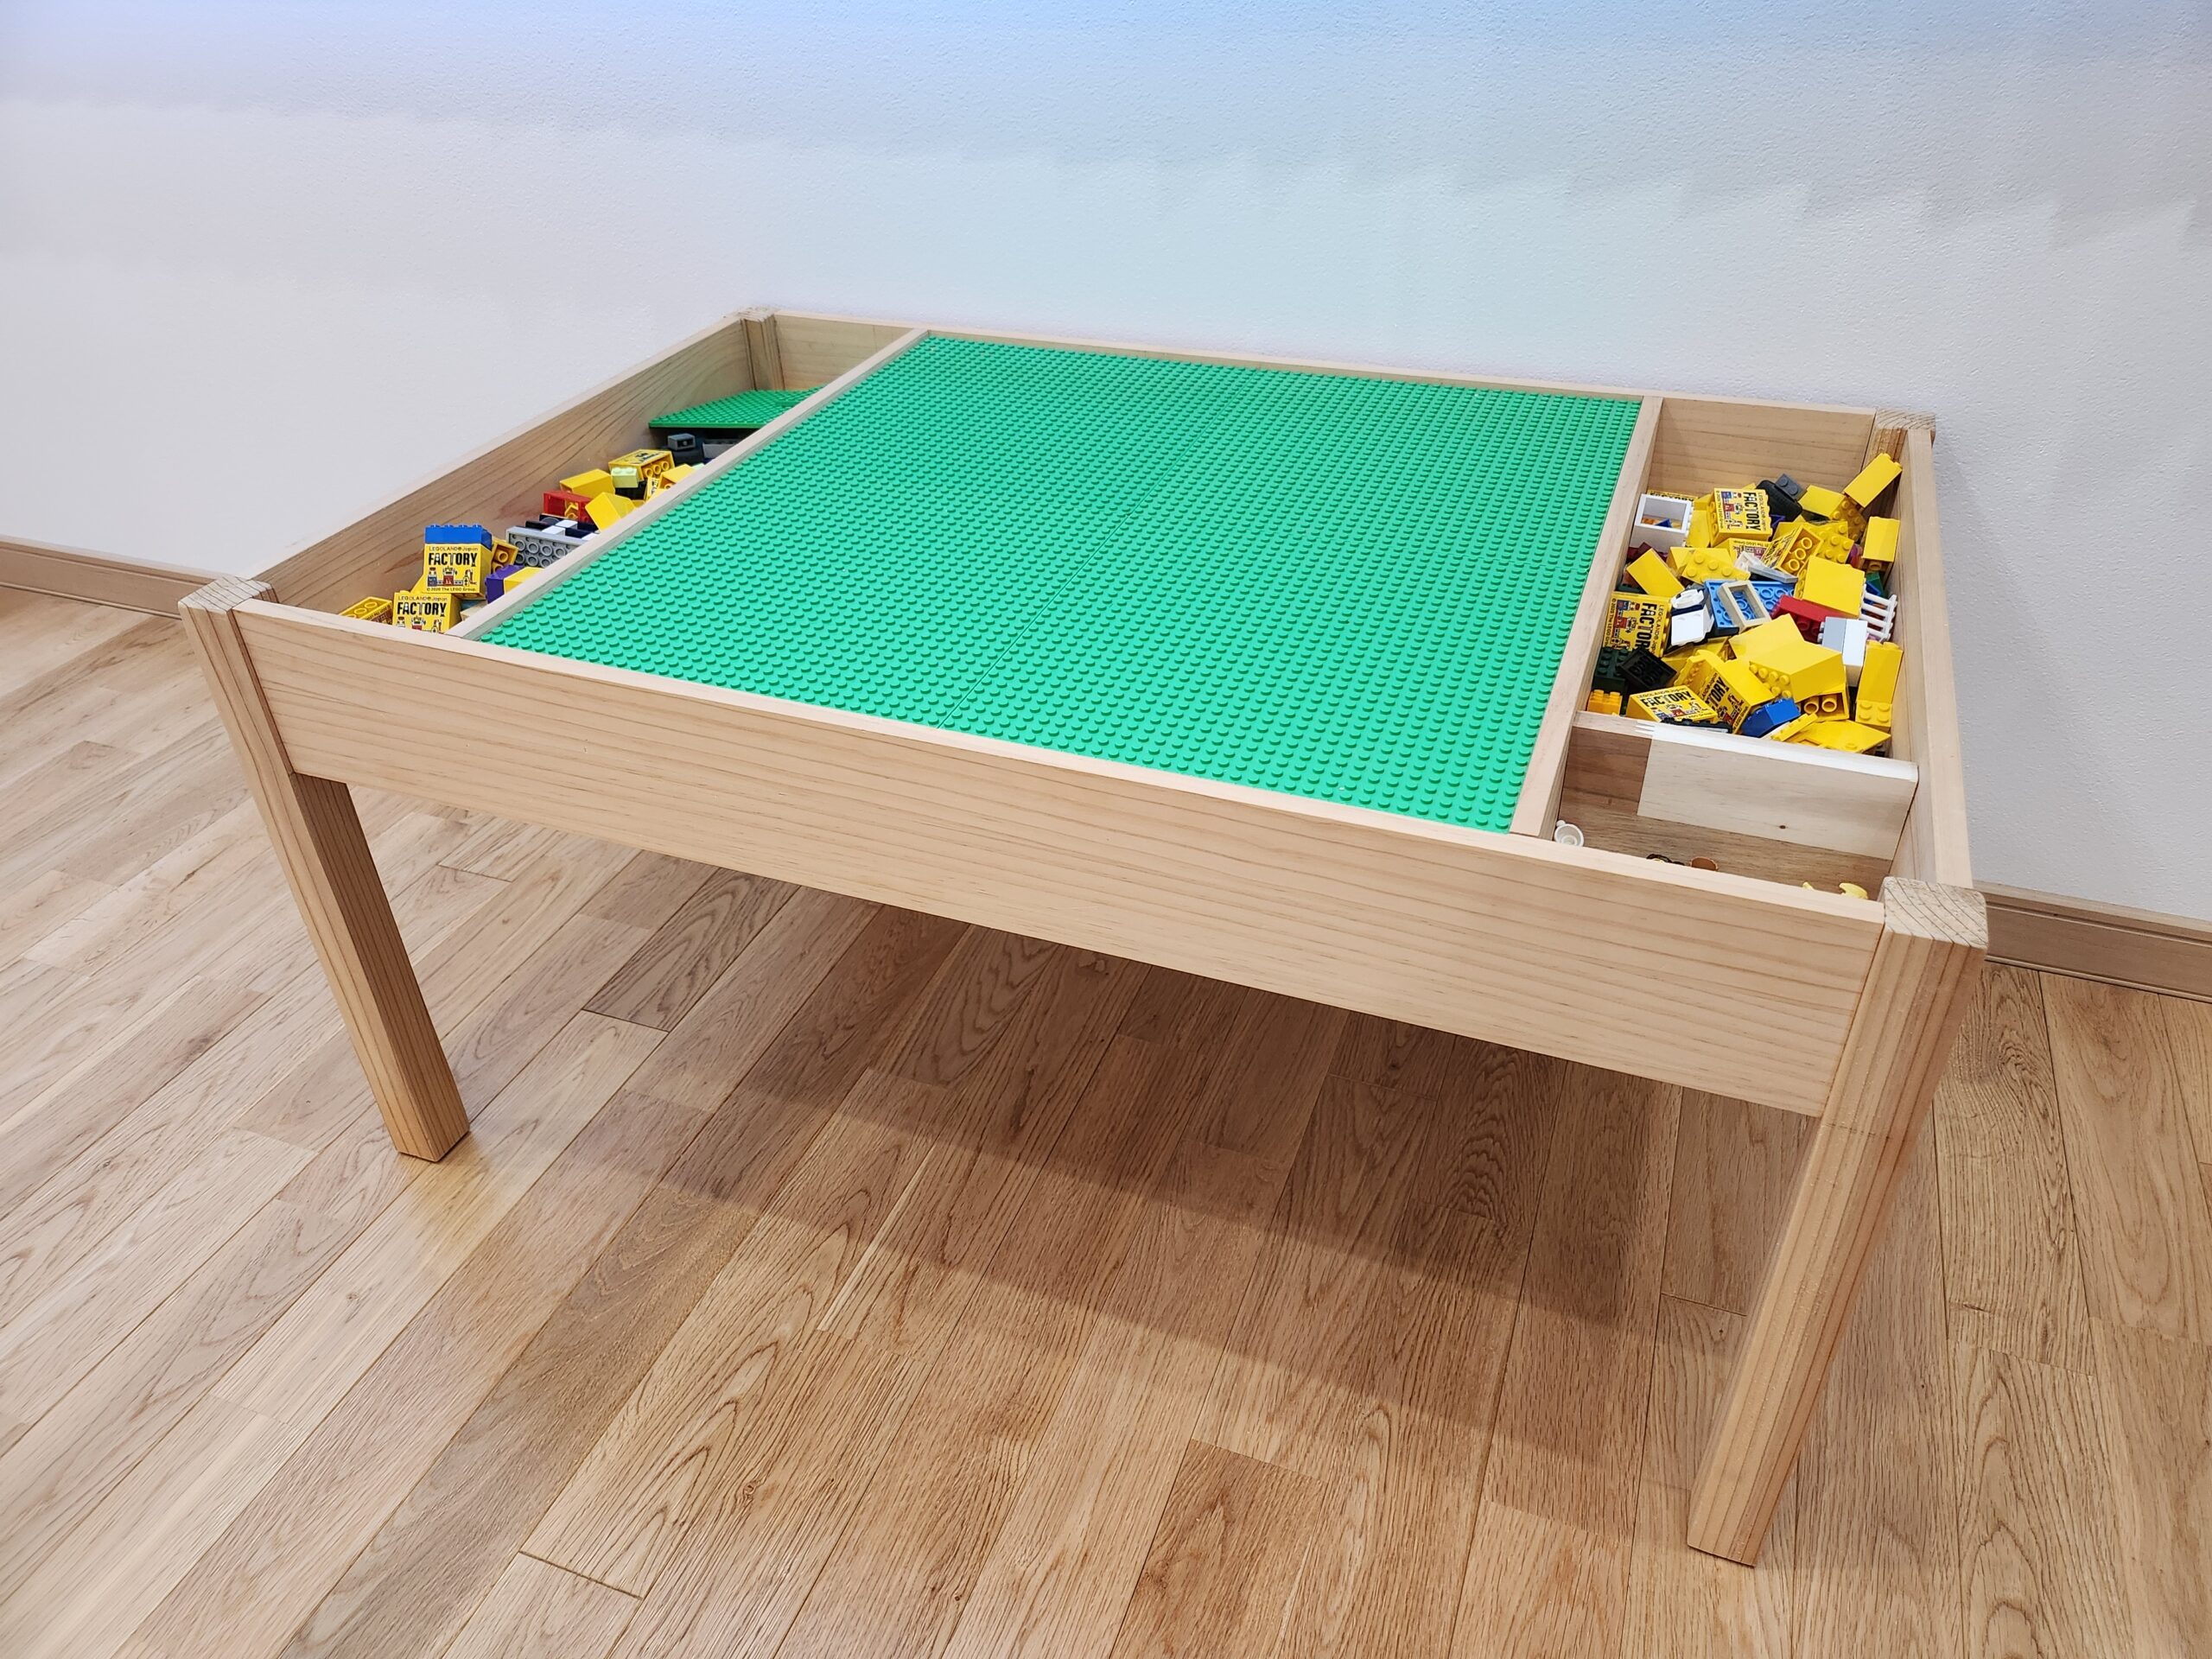 LEGO】レゴブロックテーブル【DIY】 - DIYパパの子育て奮闘記